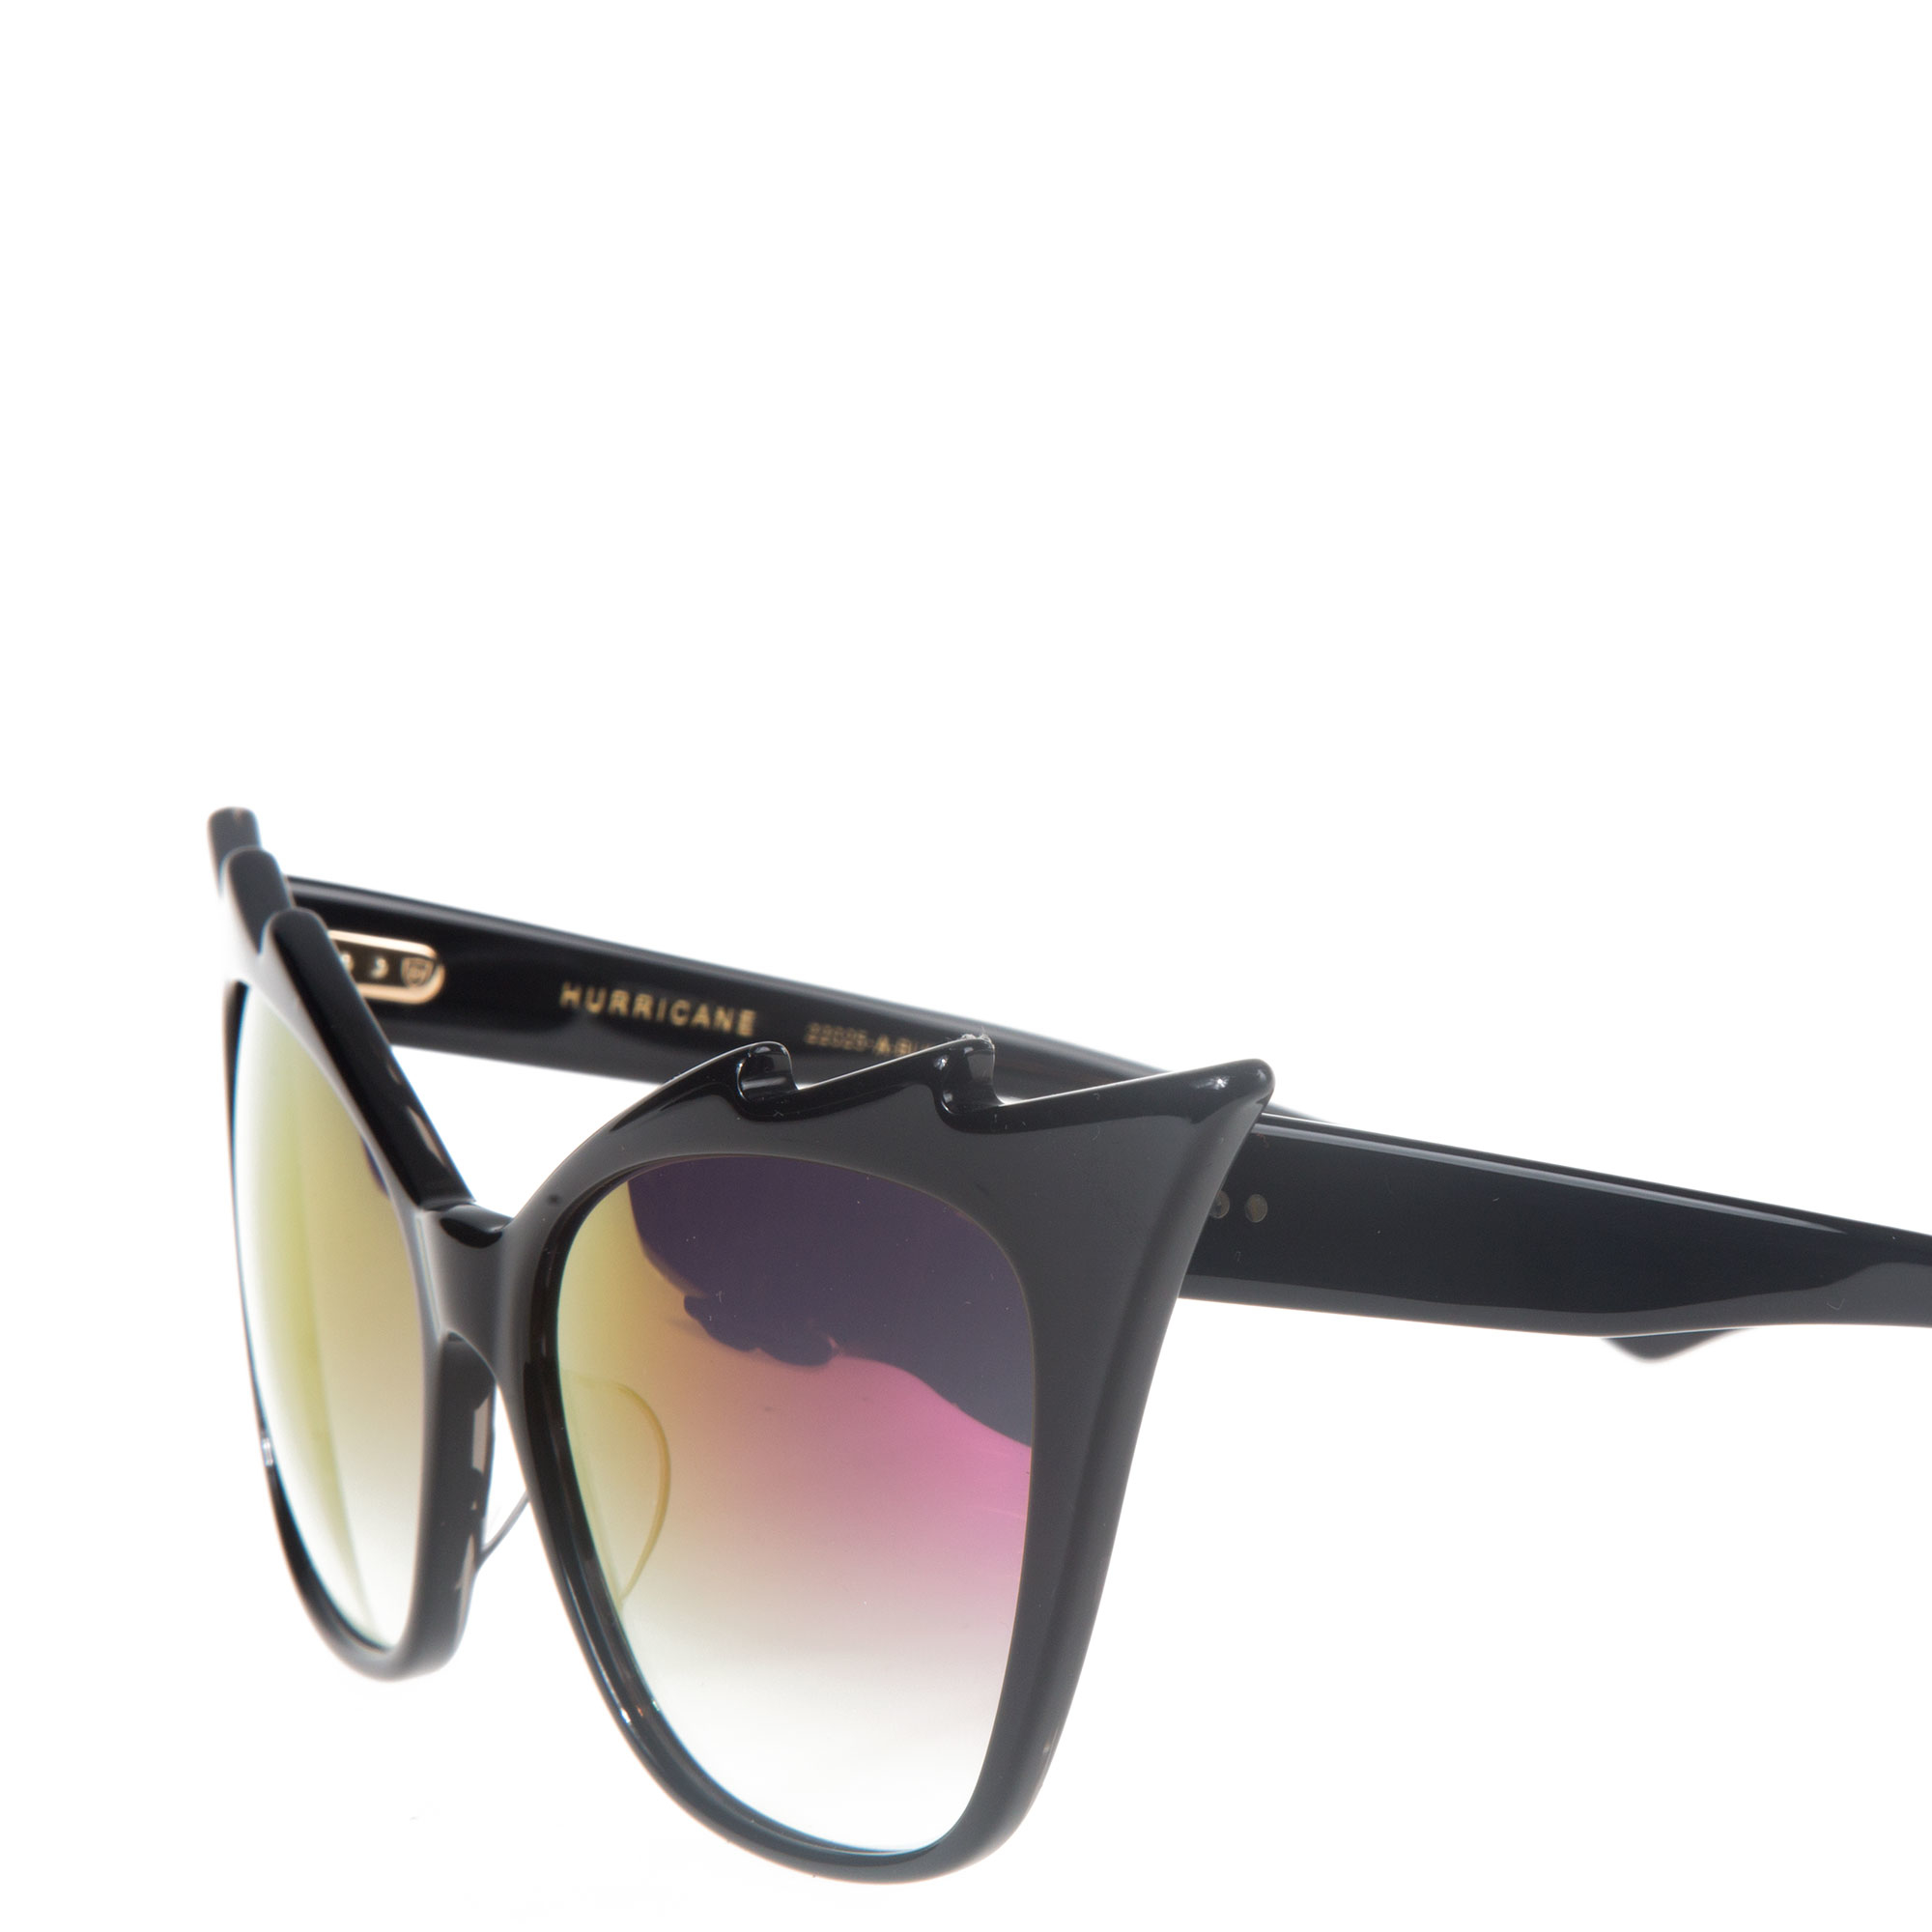 Lyst - Dita Eyewear Hurricane Sunglasses in Black